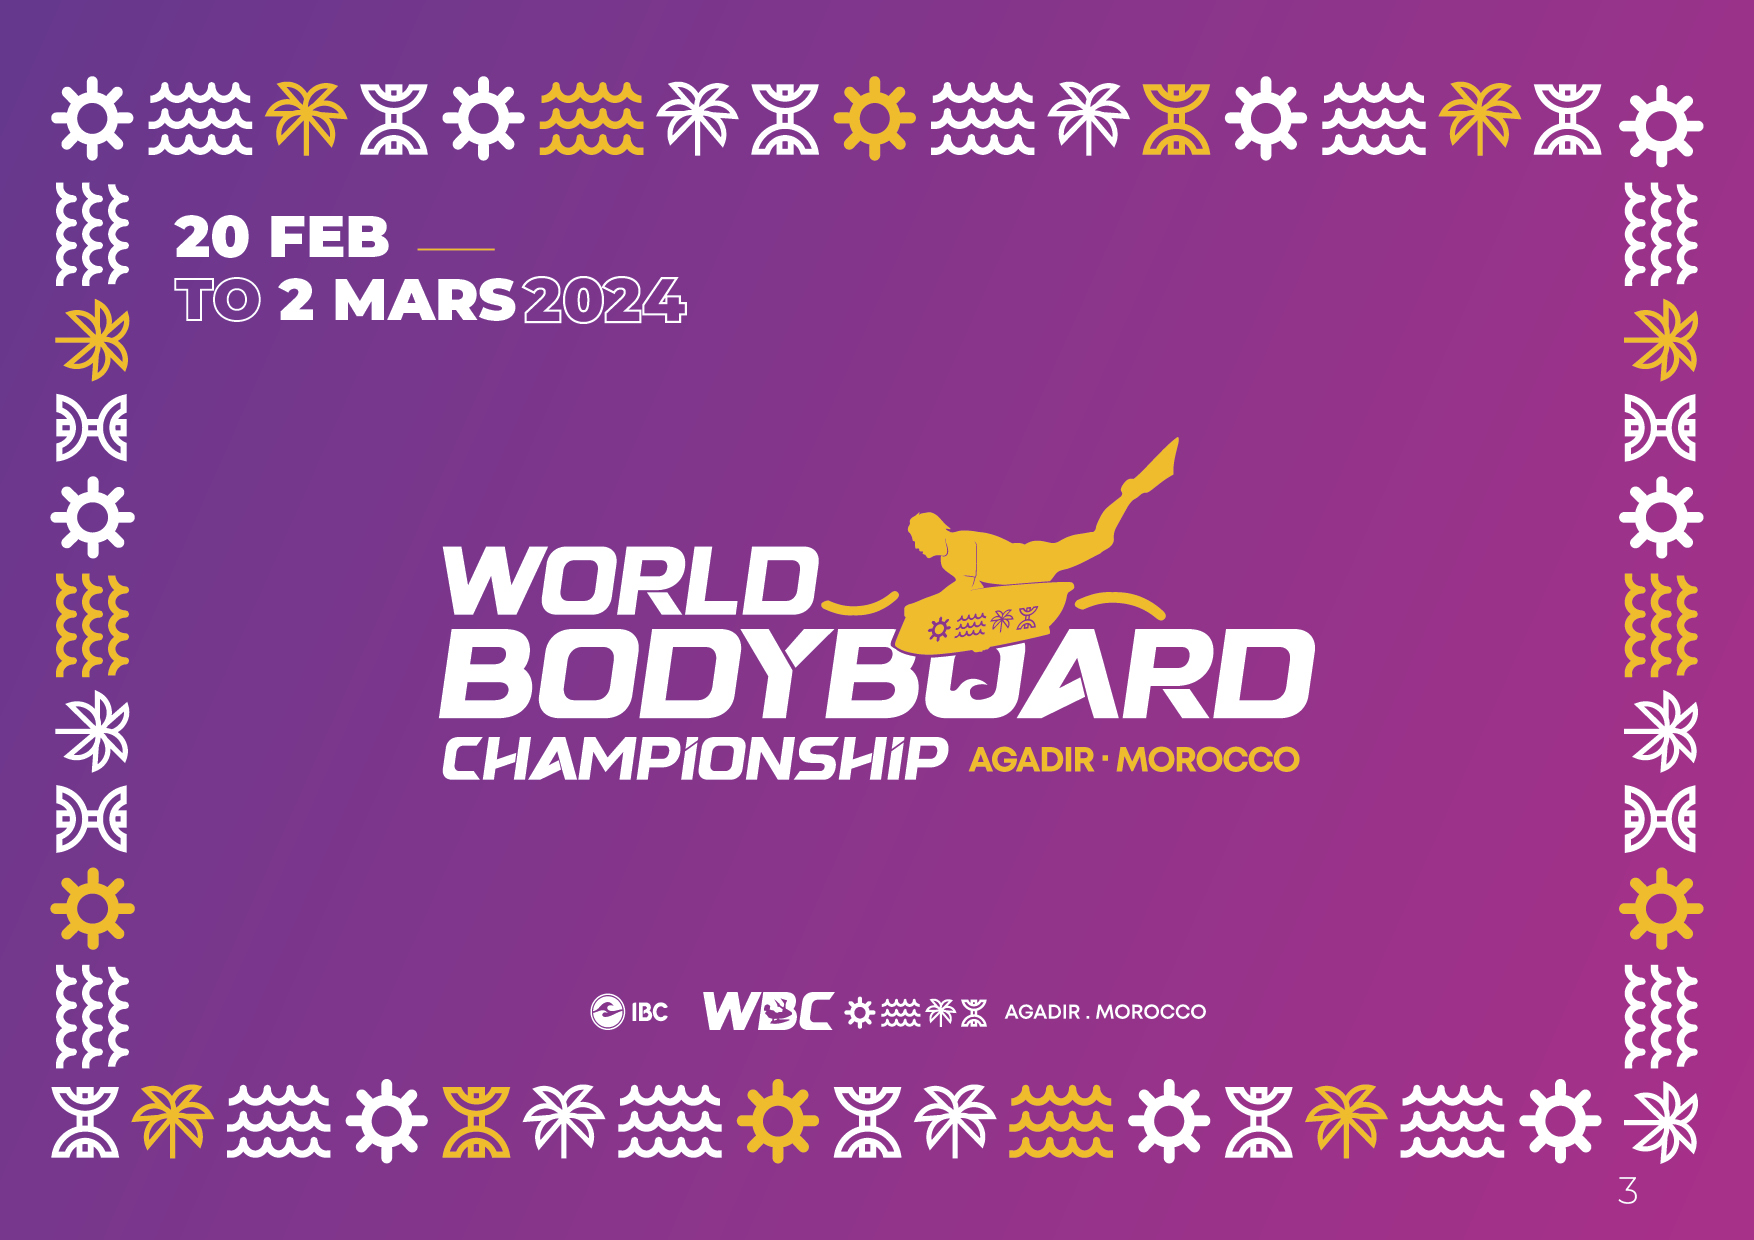 WORLD BODYBOARD CHAMPIONSHIP AGADIR MOROCCO IBC World